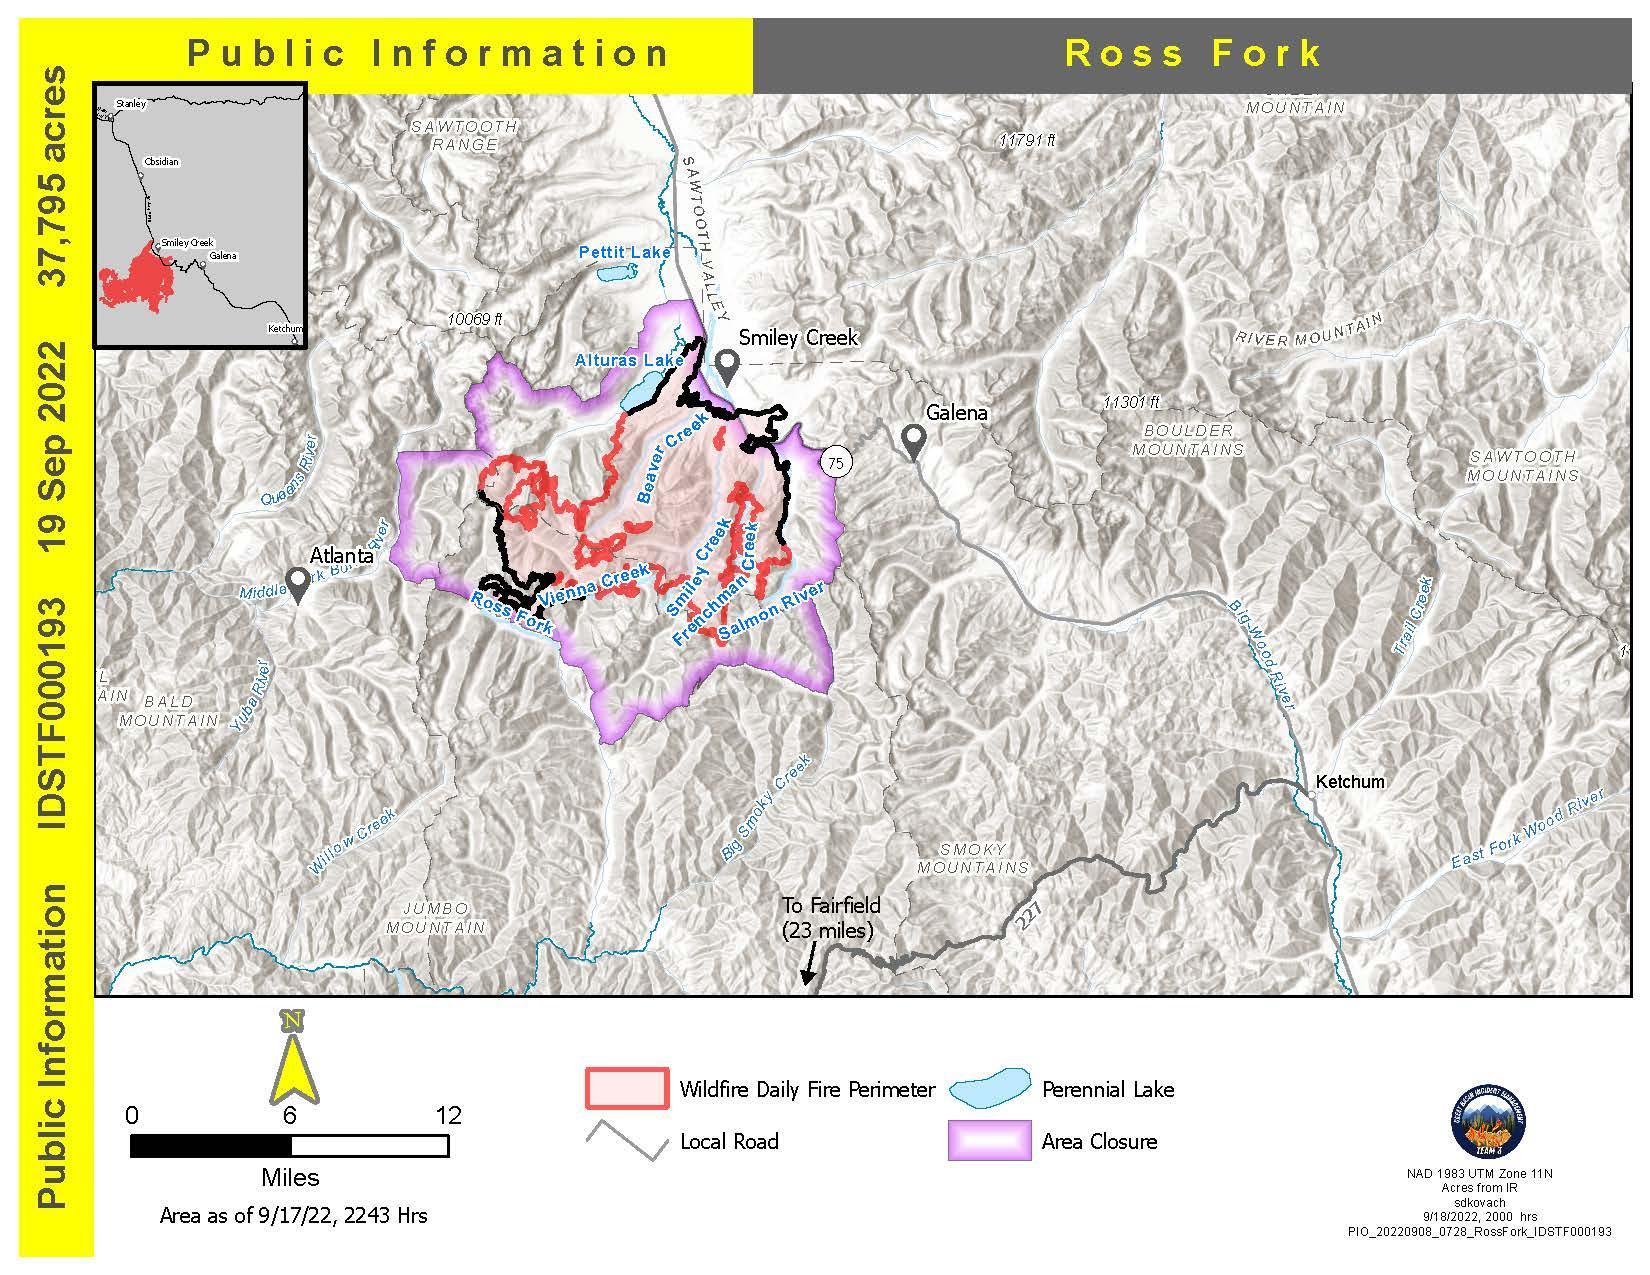 Ross Fork Fire information map, Monday, 9/19